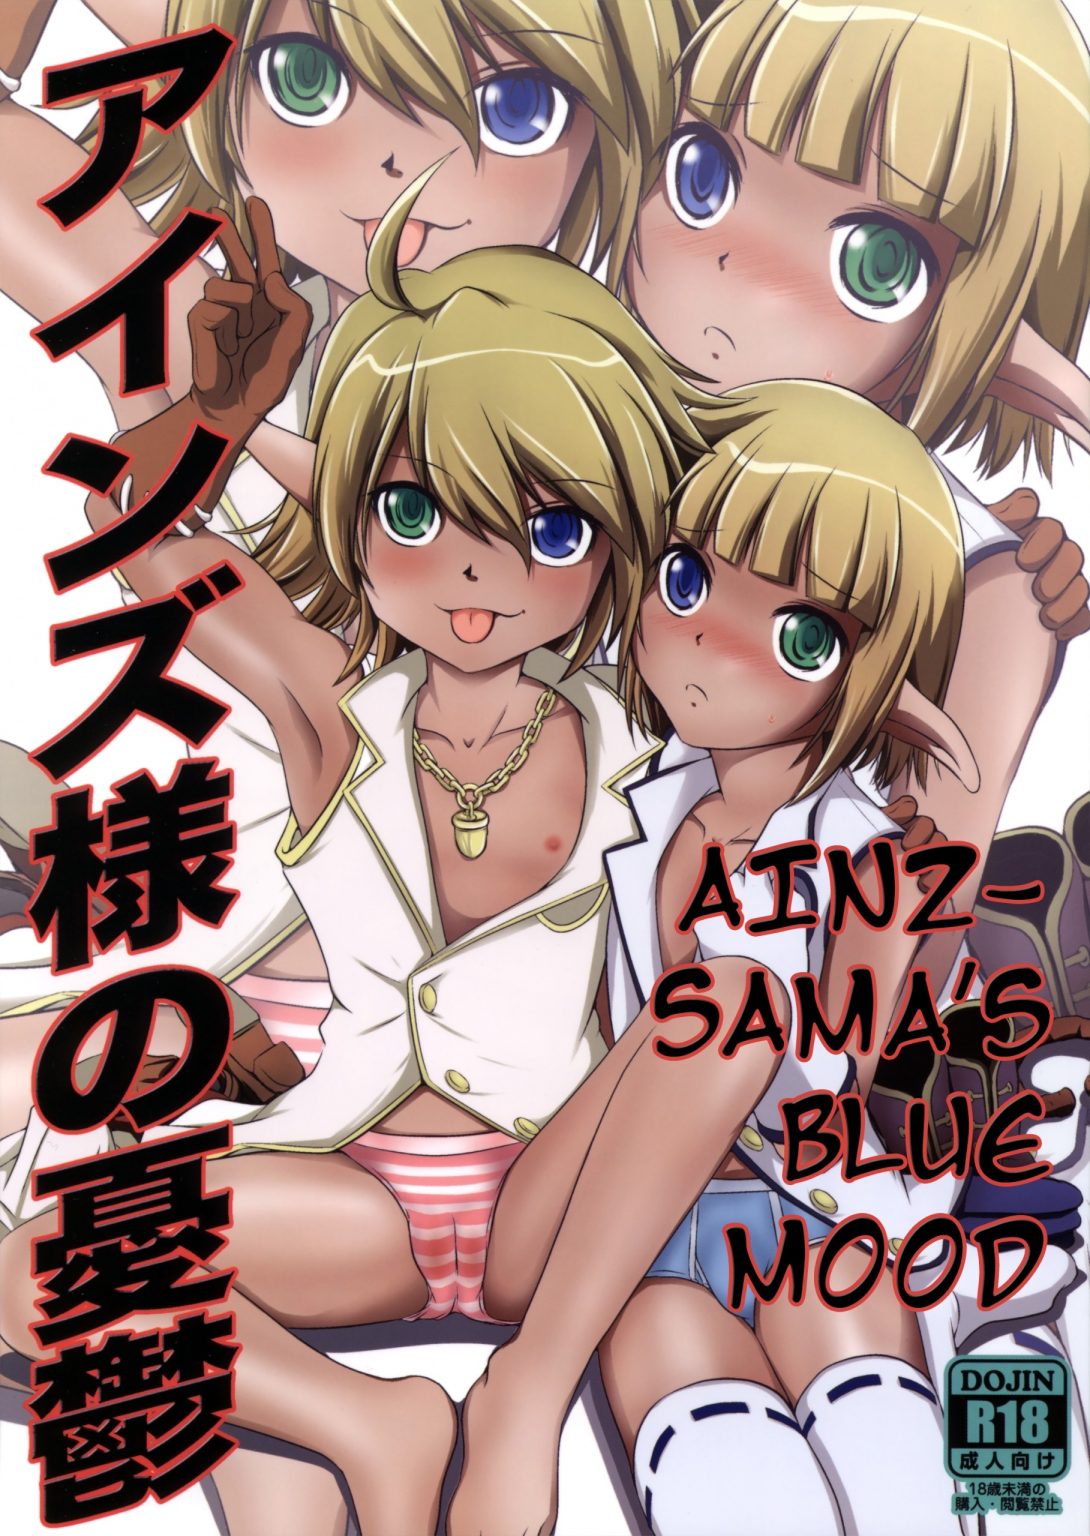 Ainz-sama's Blue Mood hentai manga picture 1